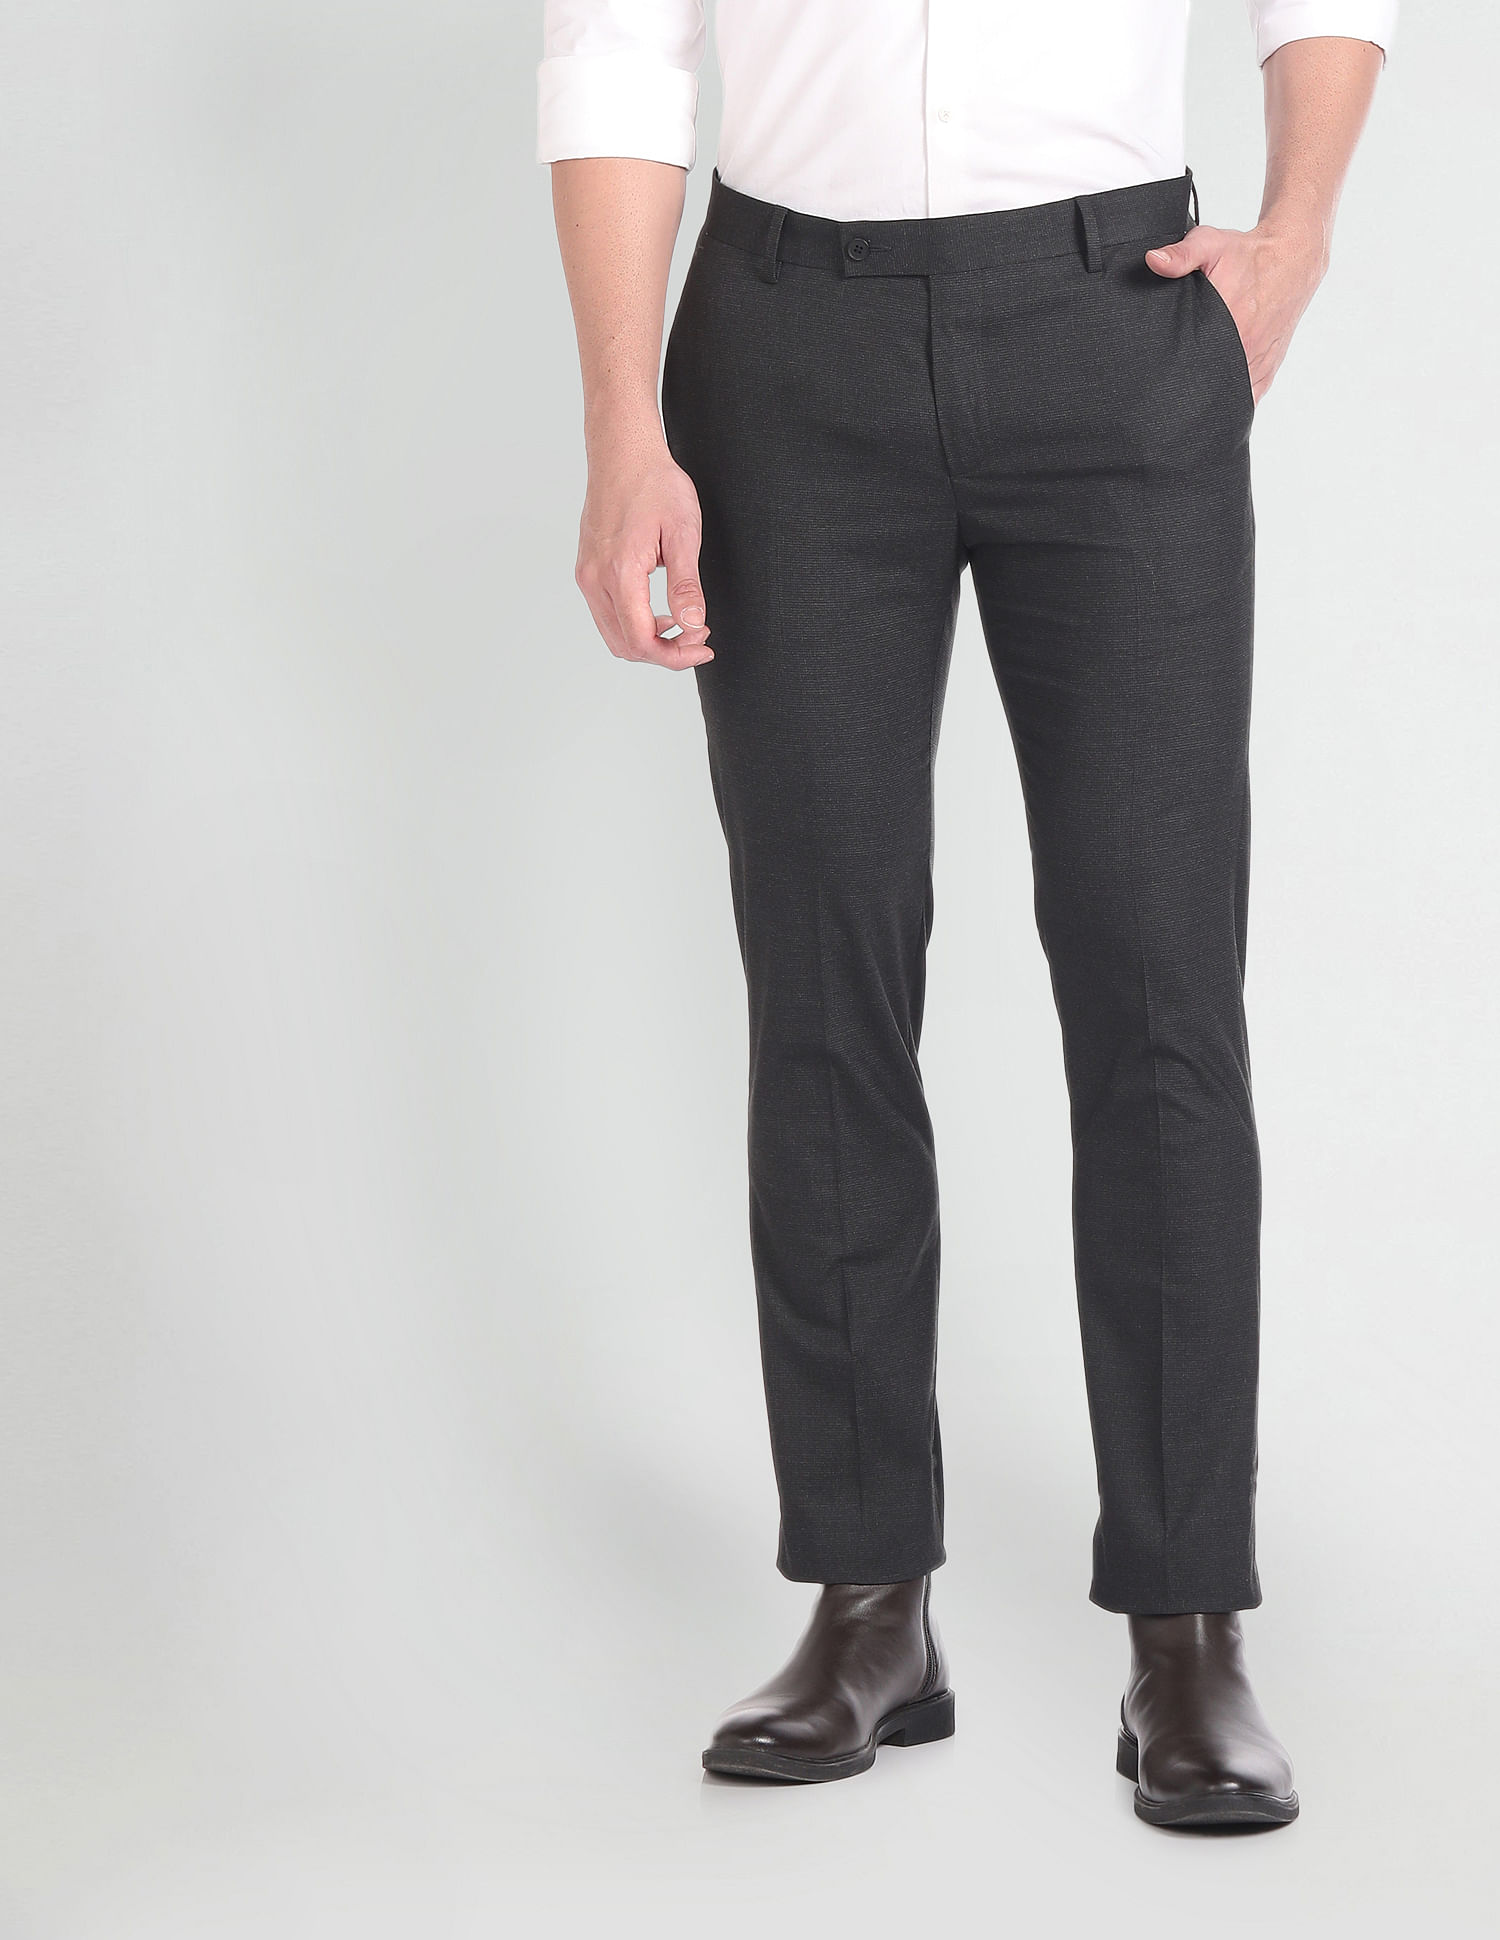 Men's Straight Leg Formal Dress Pants Casual Slim Fit Classic Cozy Long  Trousers | eBay